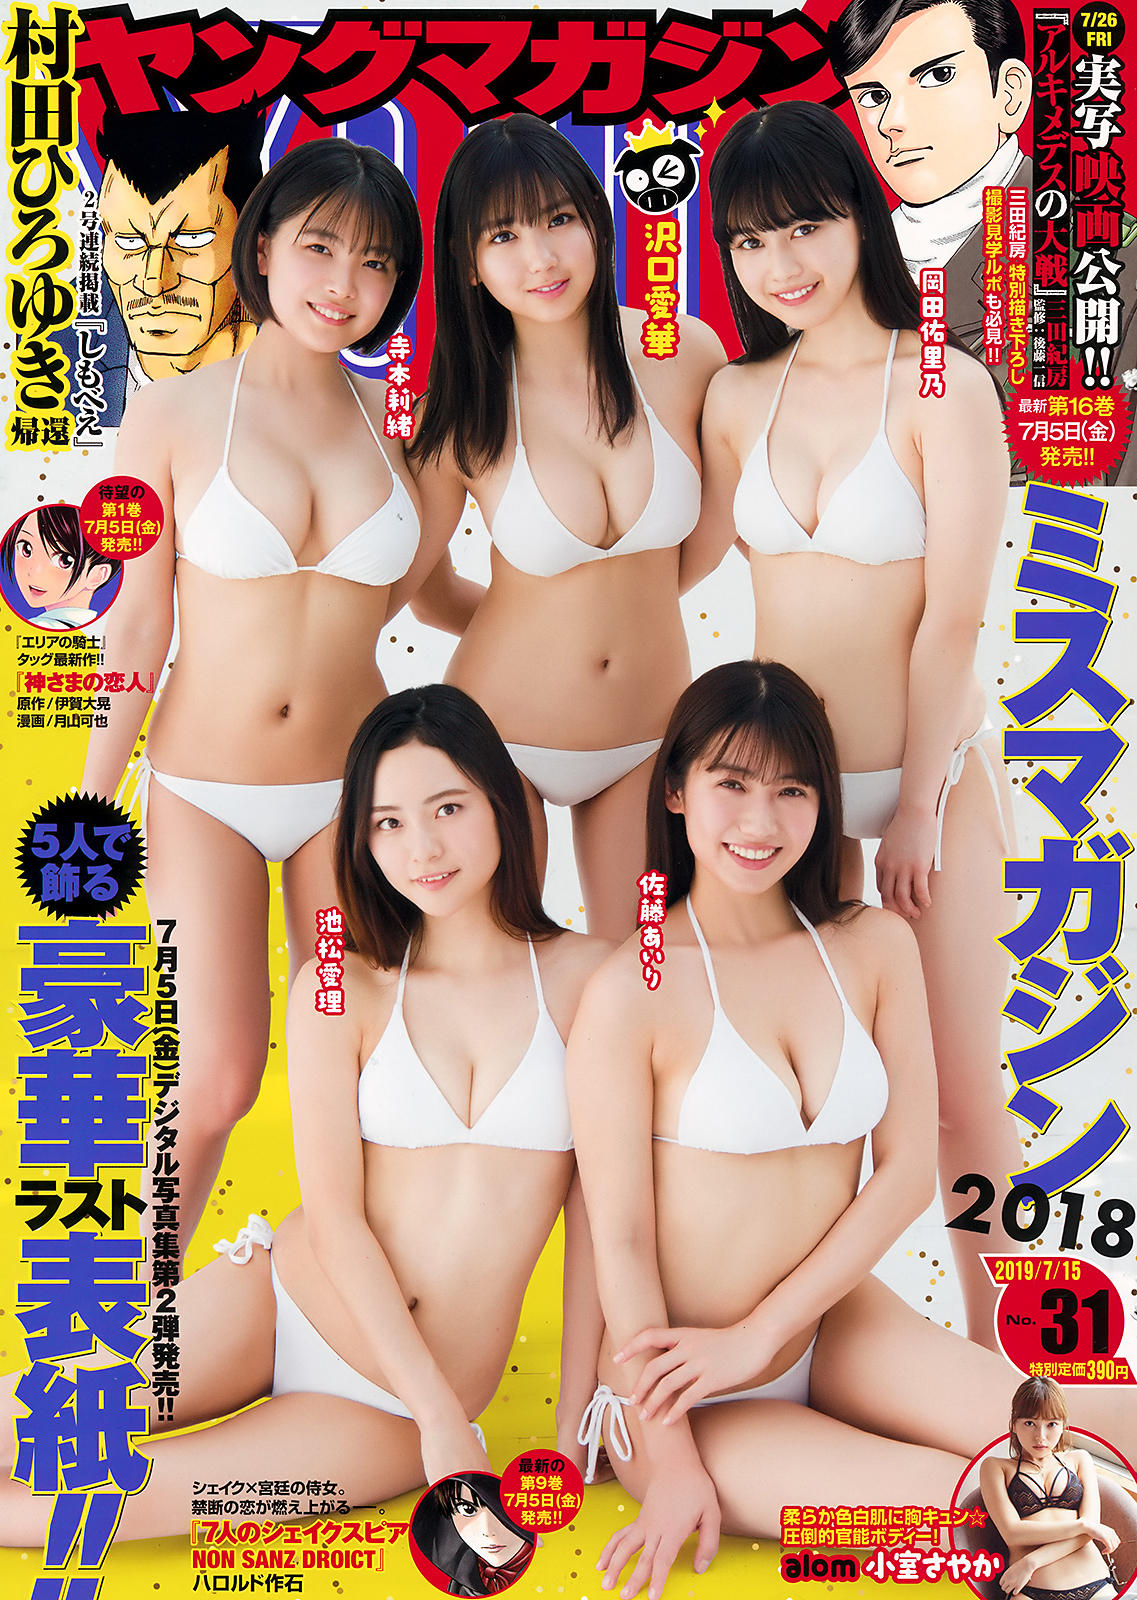 Miss Magazine 2019, Young Magazine 2019 No.31 (ヤングマガジン 2019年31號) - 亞洲美女 -